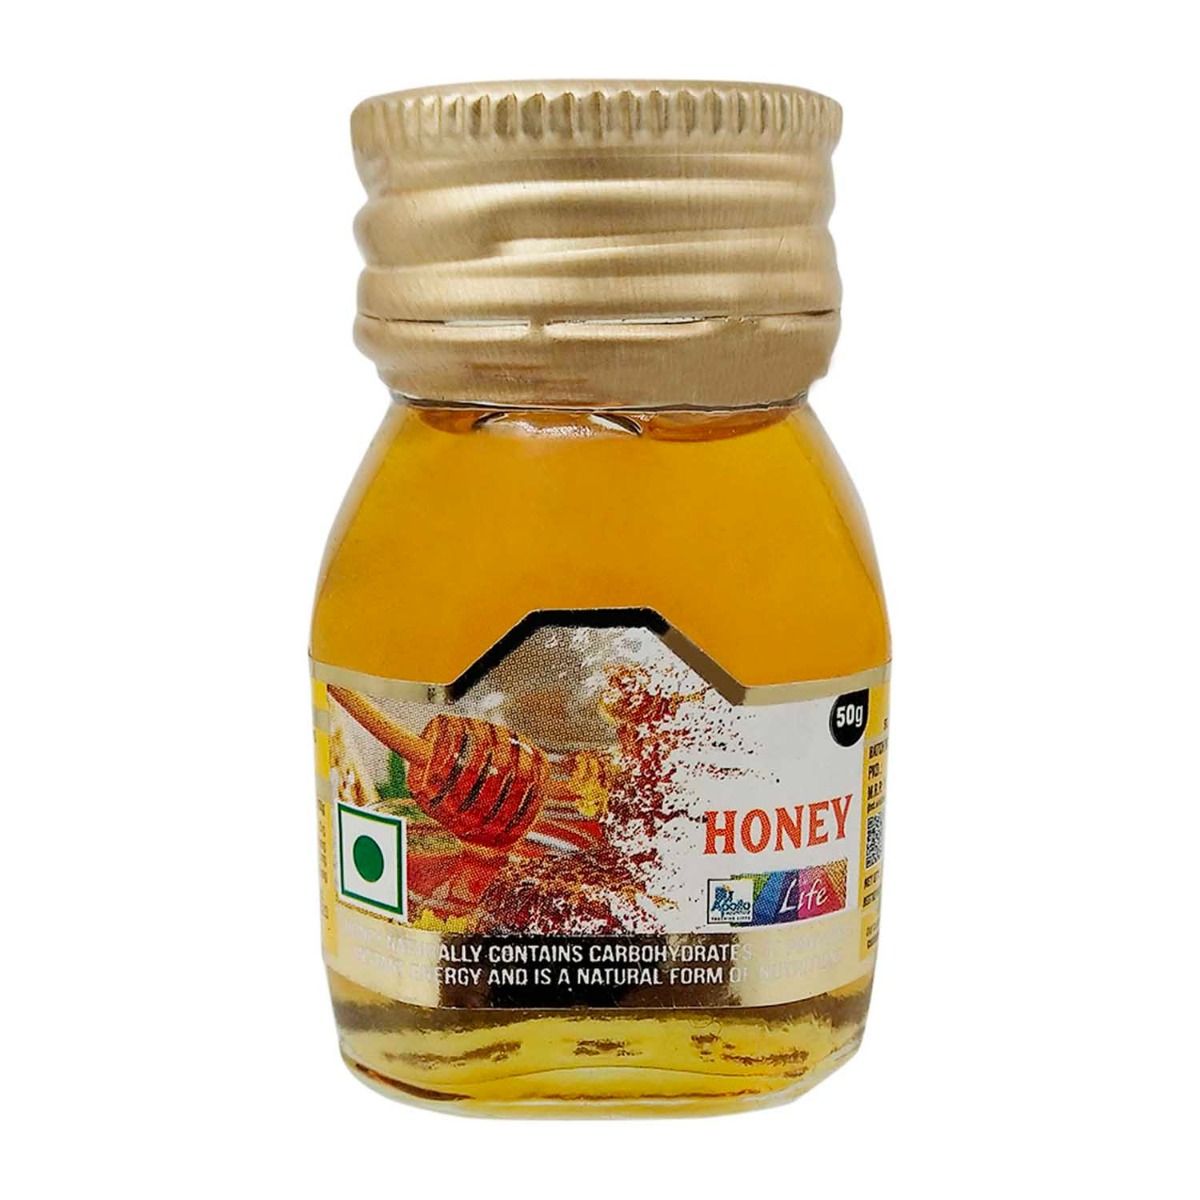 Apollo Life Honey, 50 gm, Pack of 1 